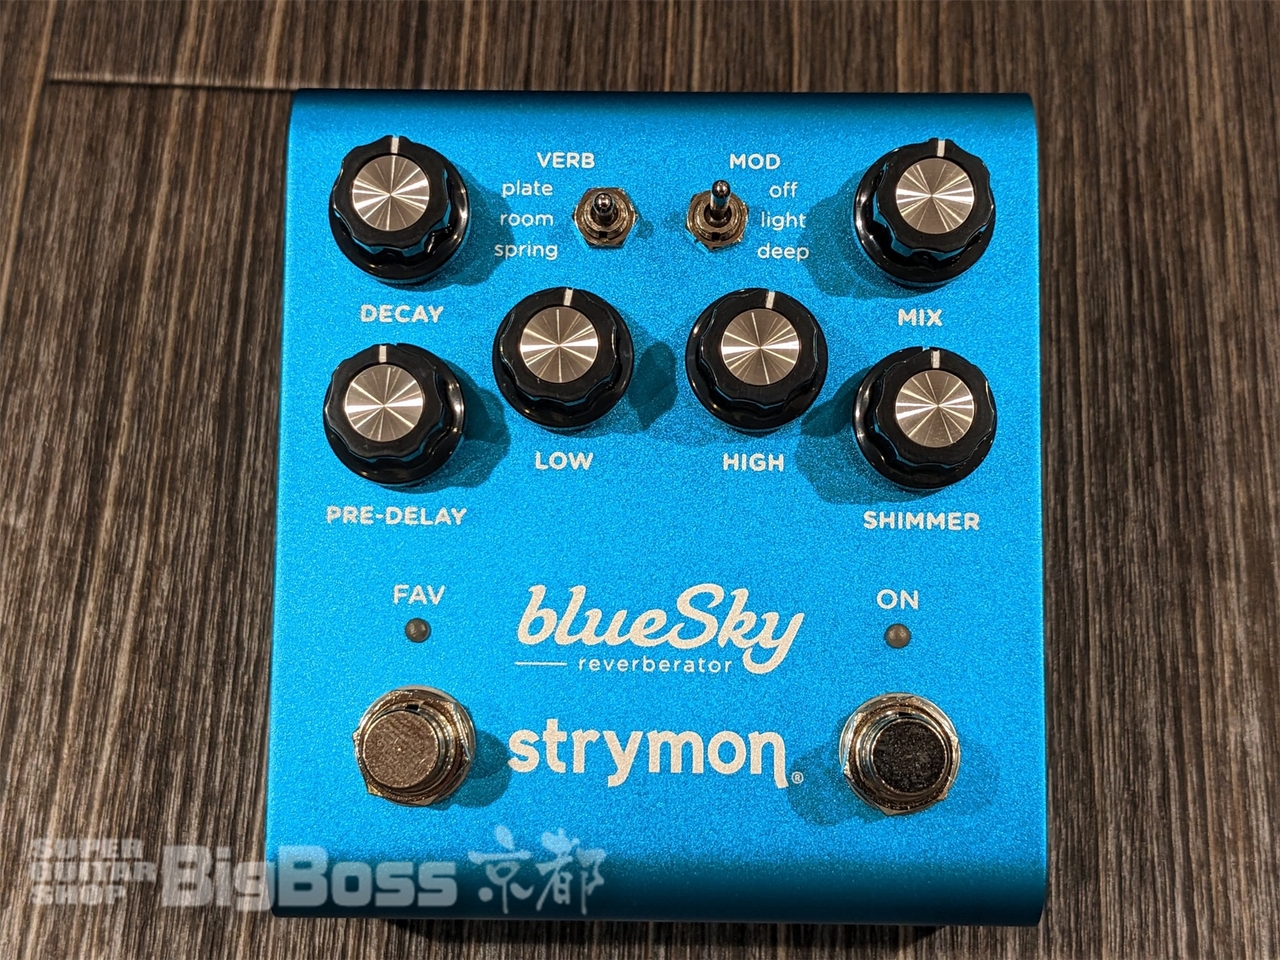 strymon blueSky reverberator